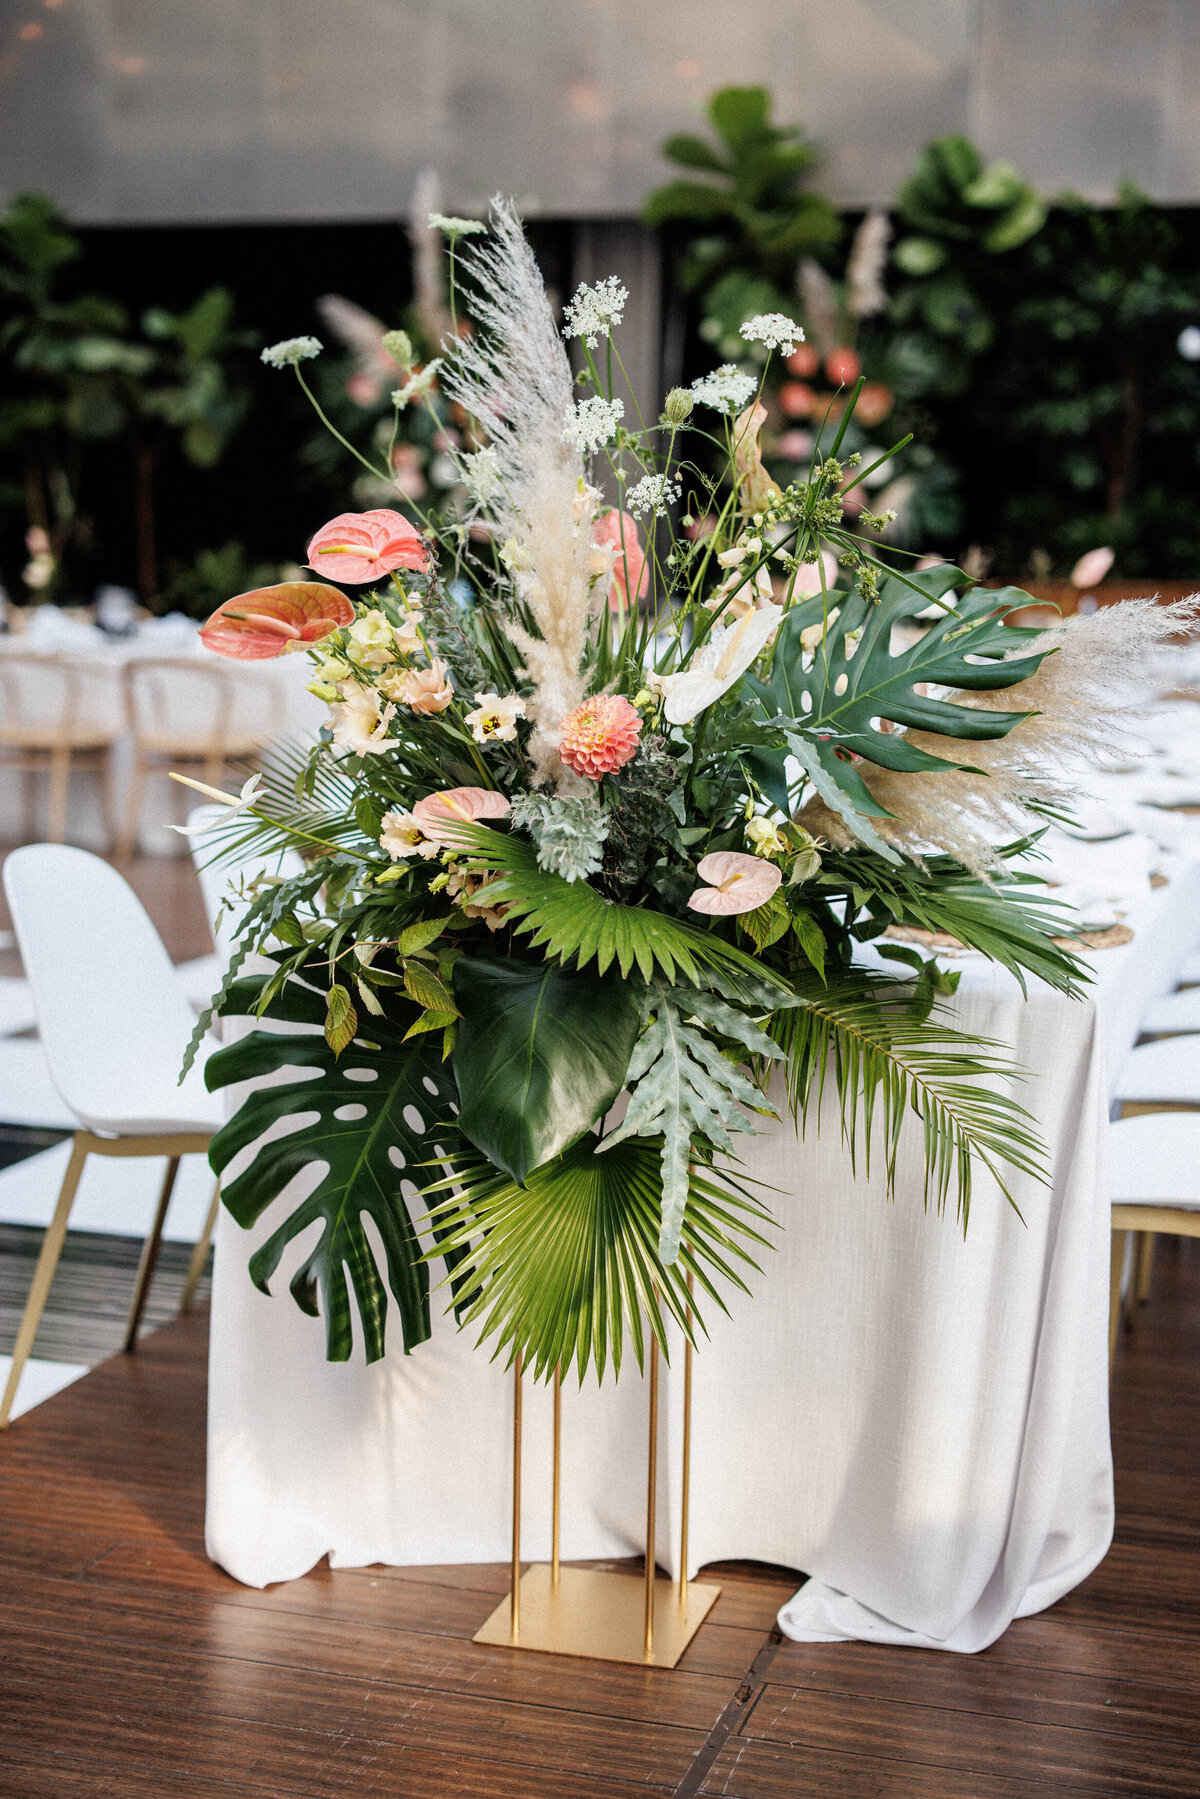 Atelier-Carmel-Wedding-Florist-GALLERY-Centerpieces-41